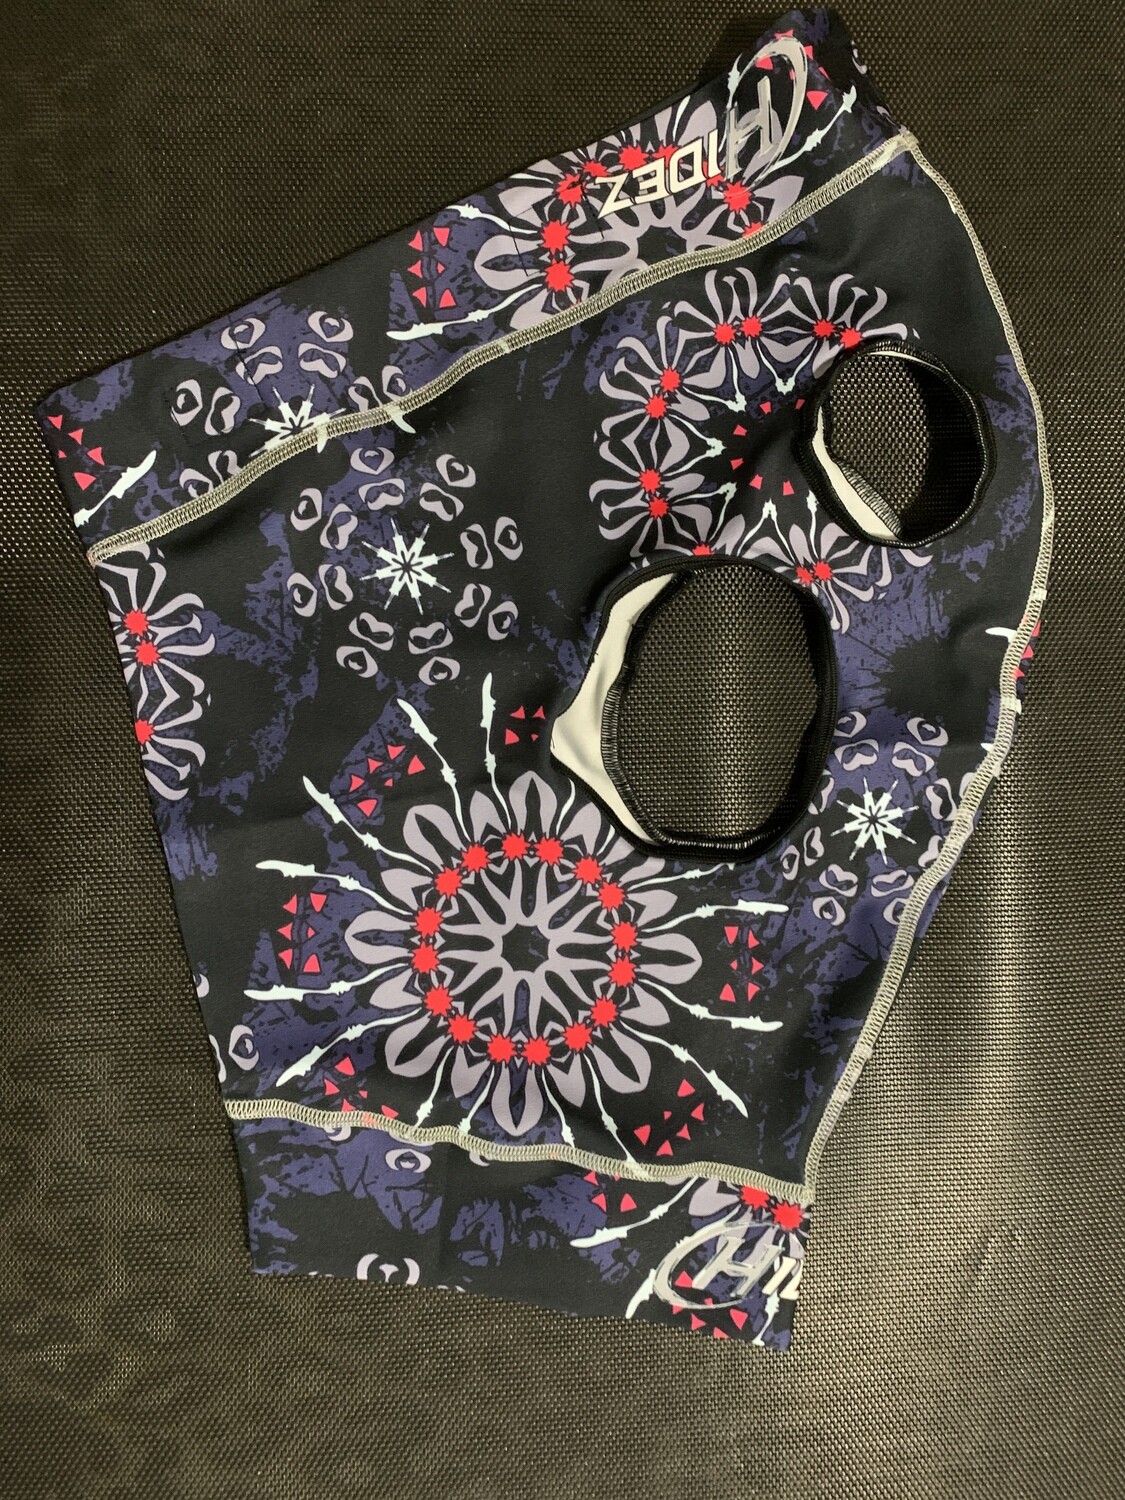 Hidez Printed Mask - small - in-stock “kaleidoscope in purple”